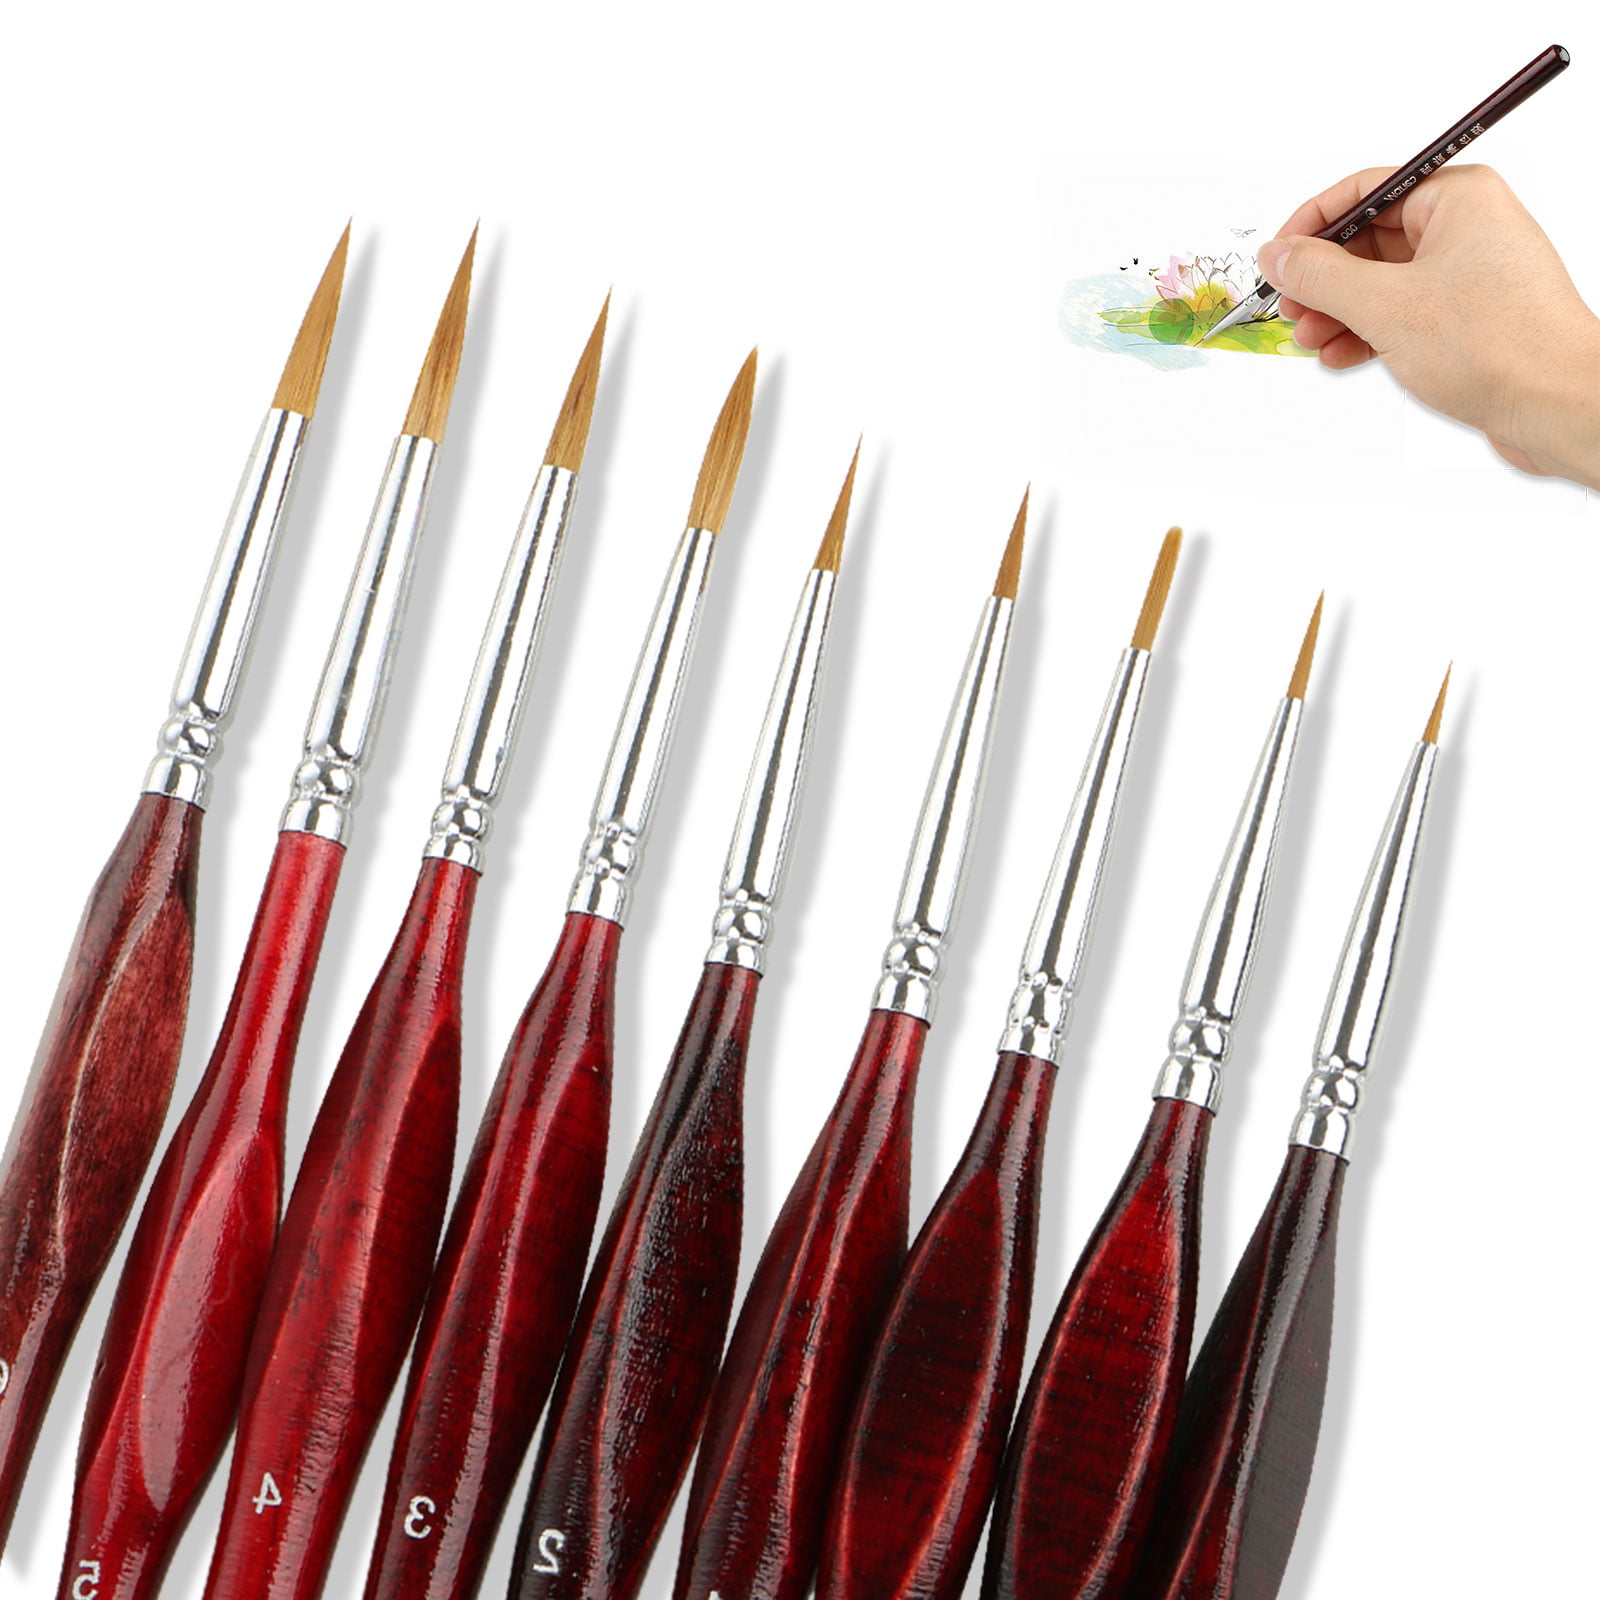 Miniature Paint Brush Set, 9pack Miniature Brushes for